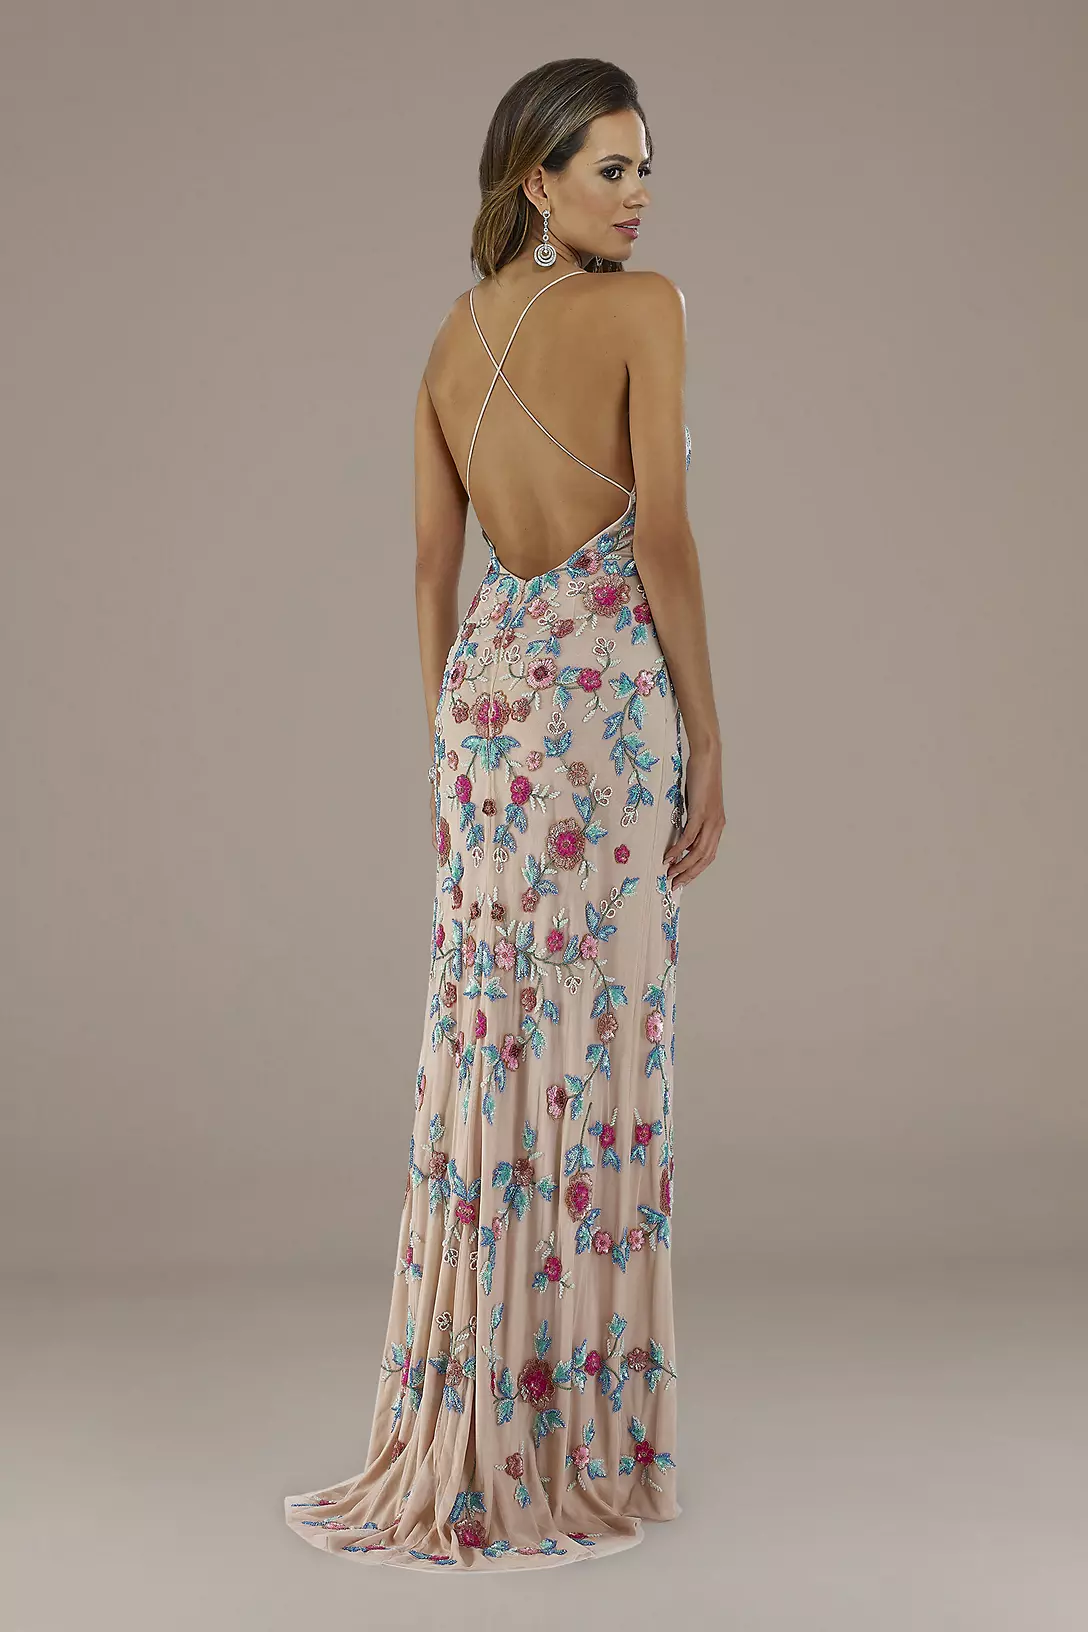 Lara Emily Cross-Back Floral Beaded Sheath Gown Image 2